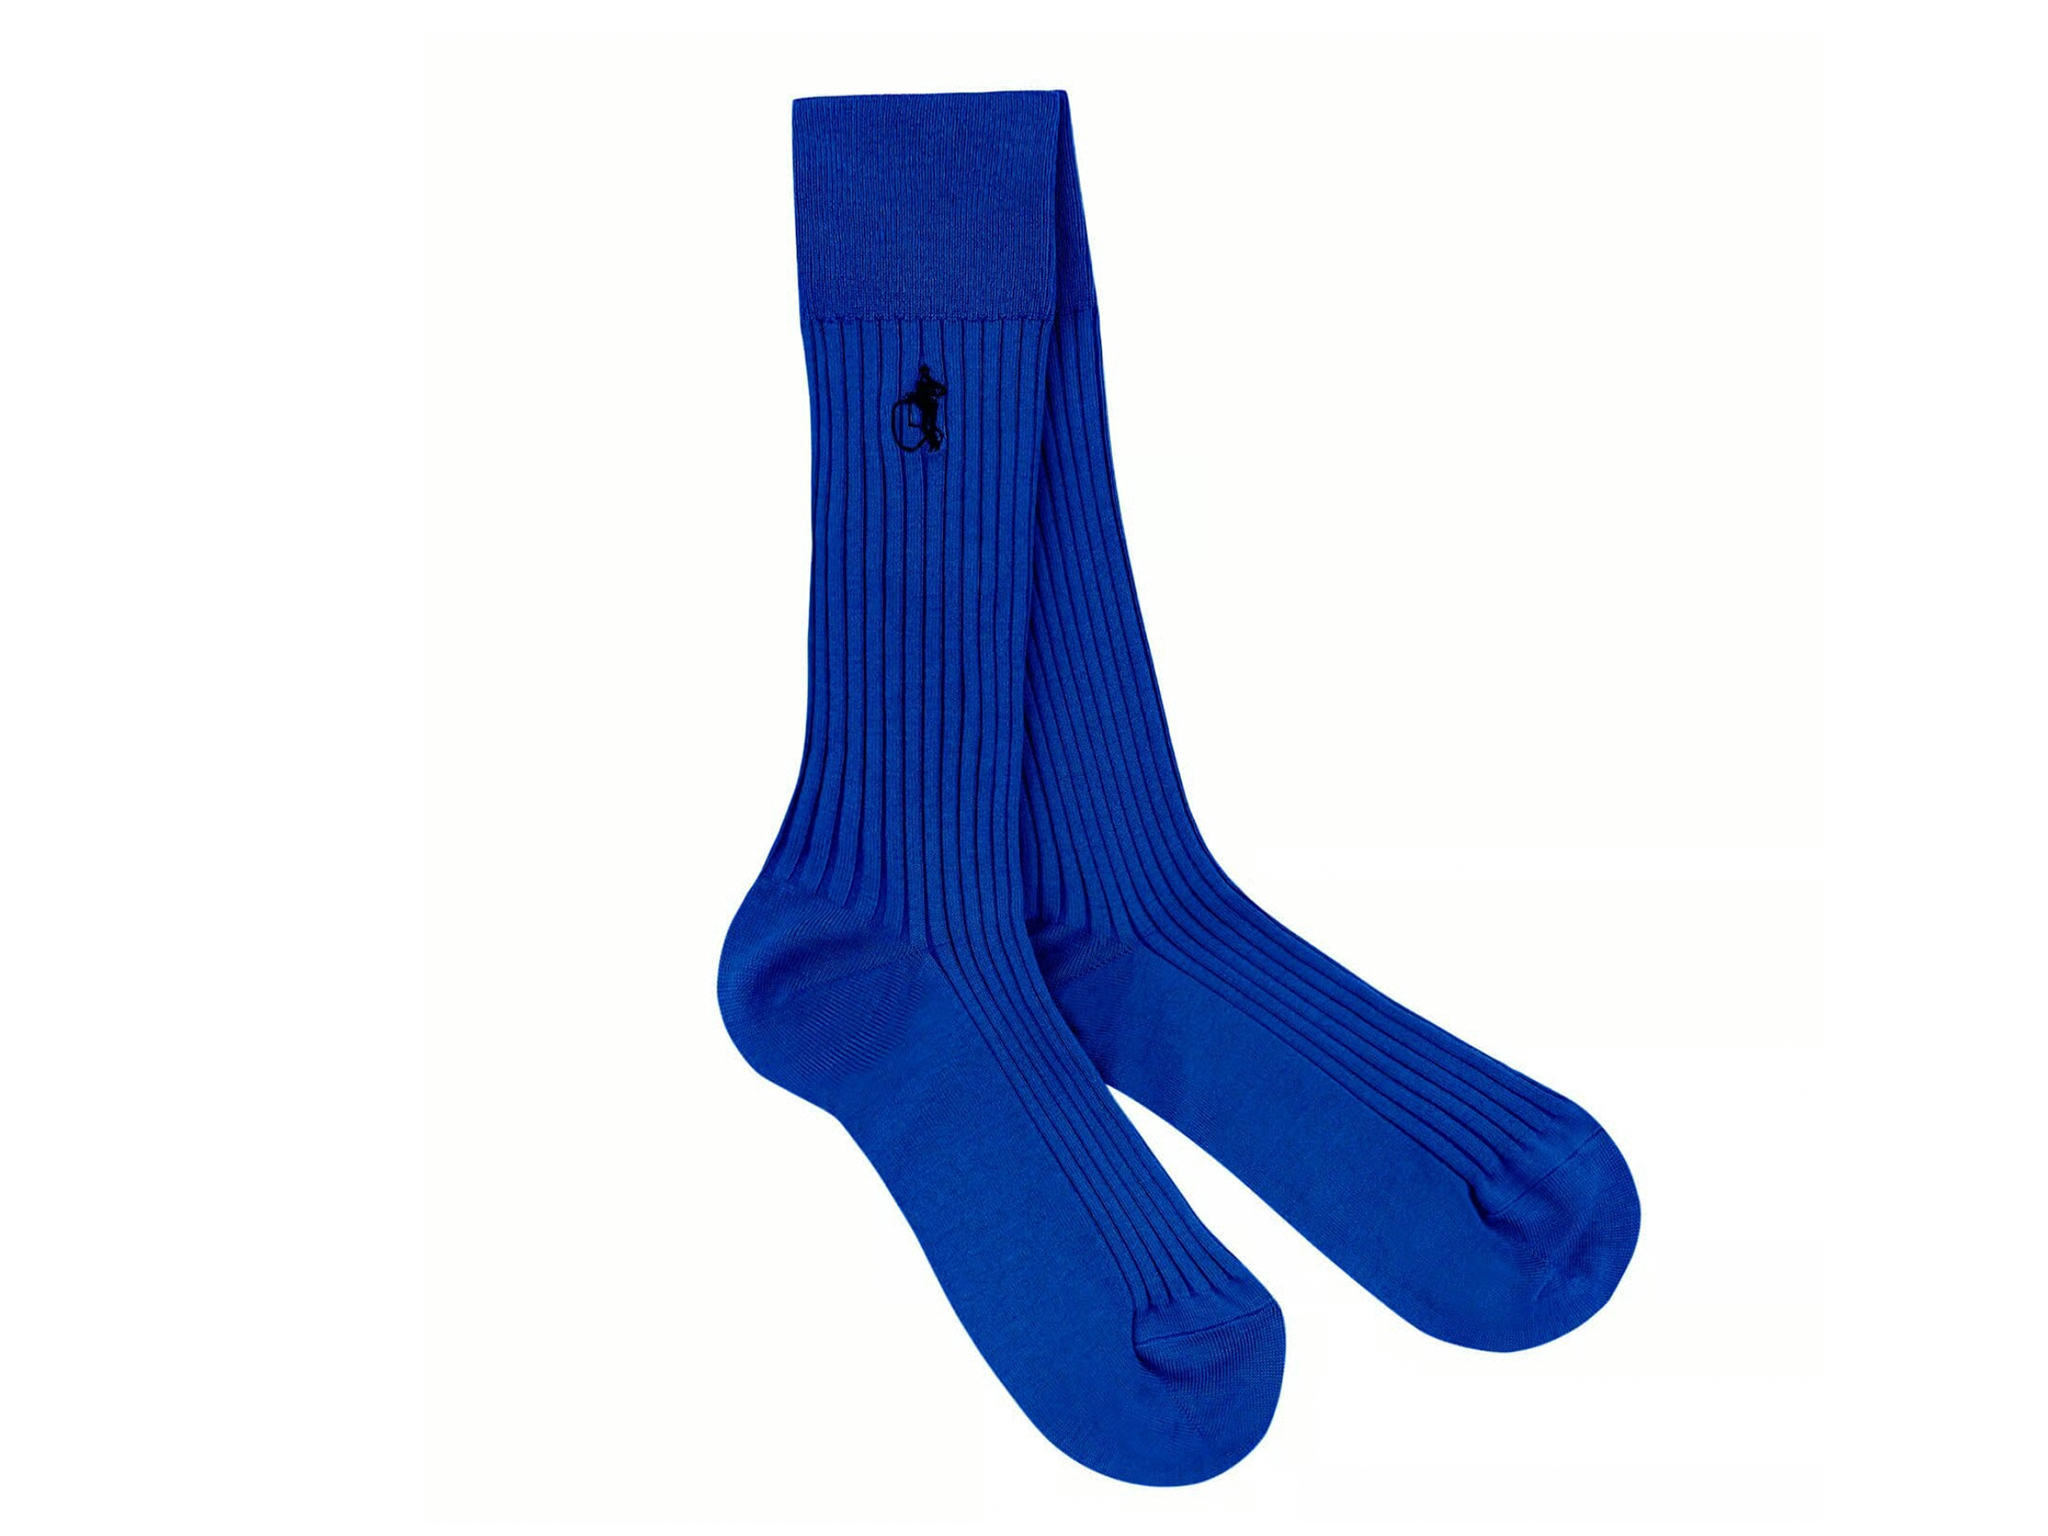 London Sock Co simply sartorial socks